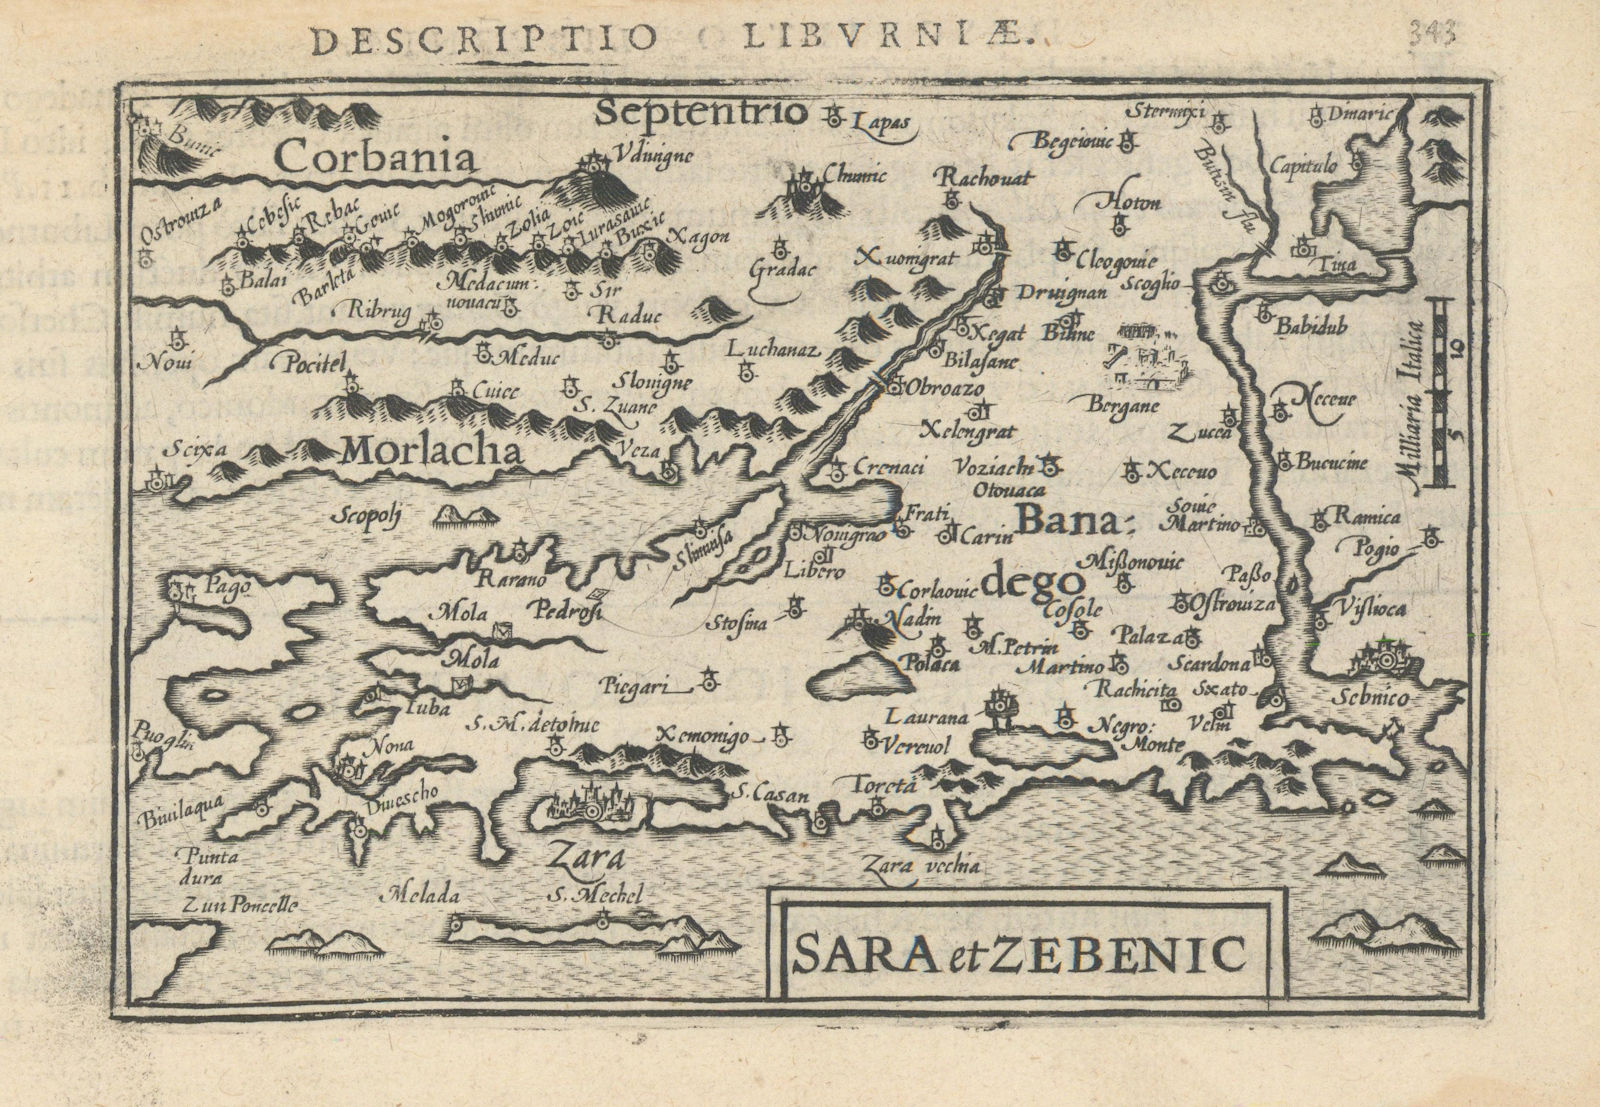 Liburniae / Sara & Zebenic by Bertius/ Langenes. Zadar Sibenik Dalmatia 1603 map